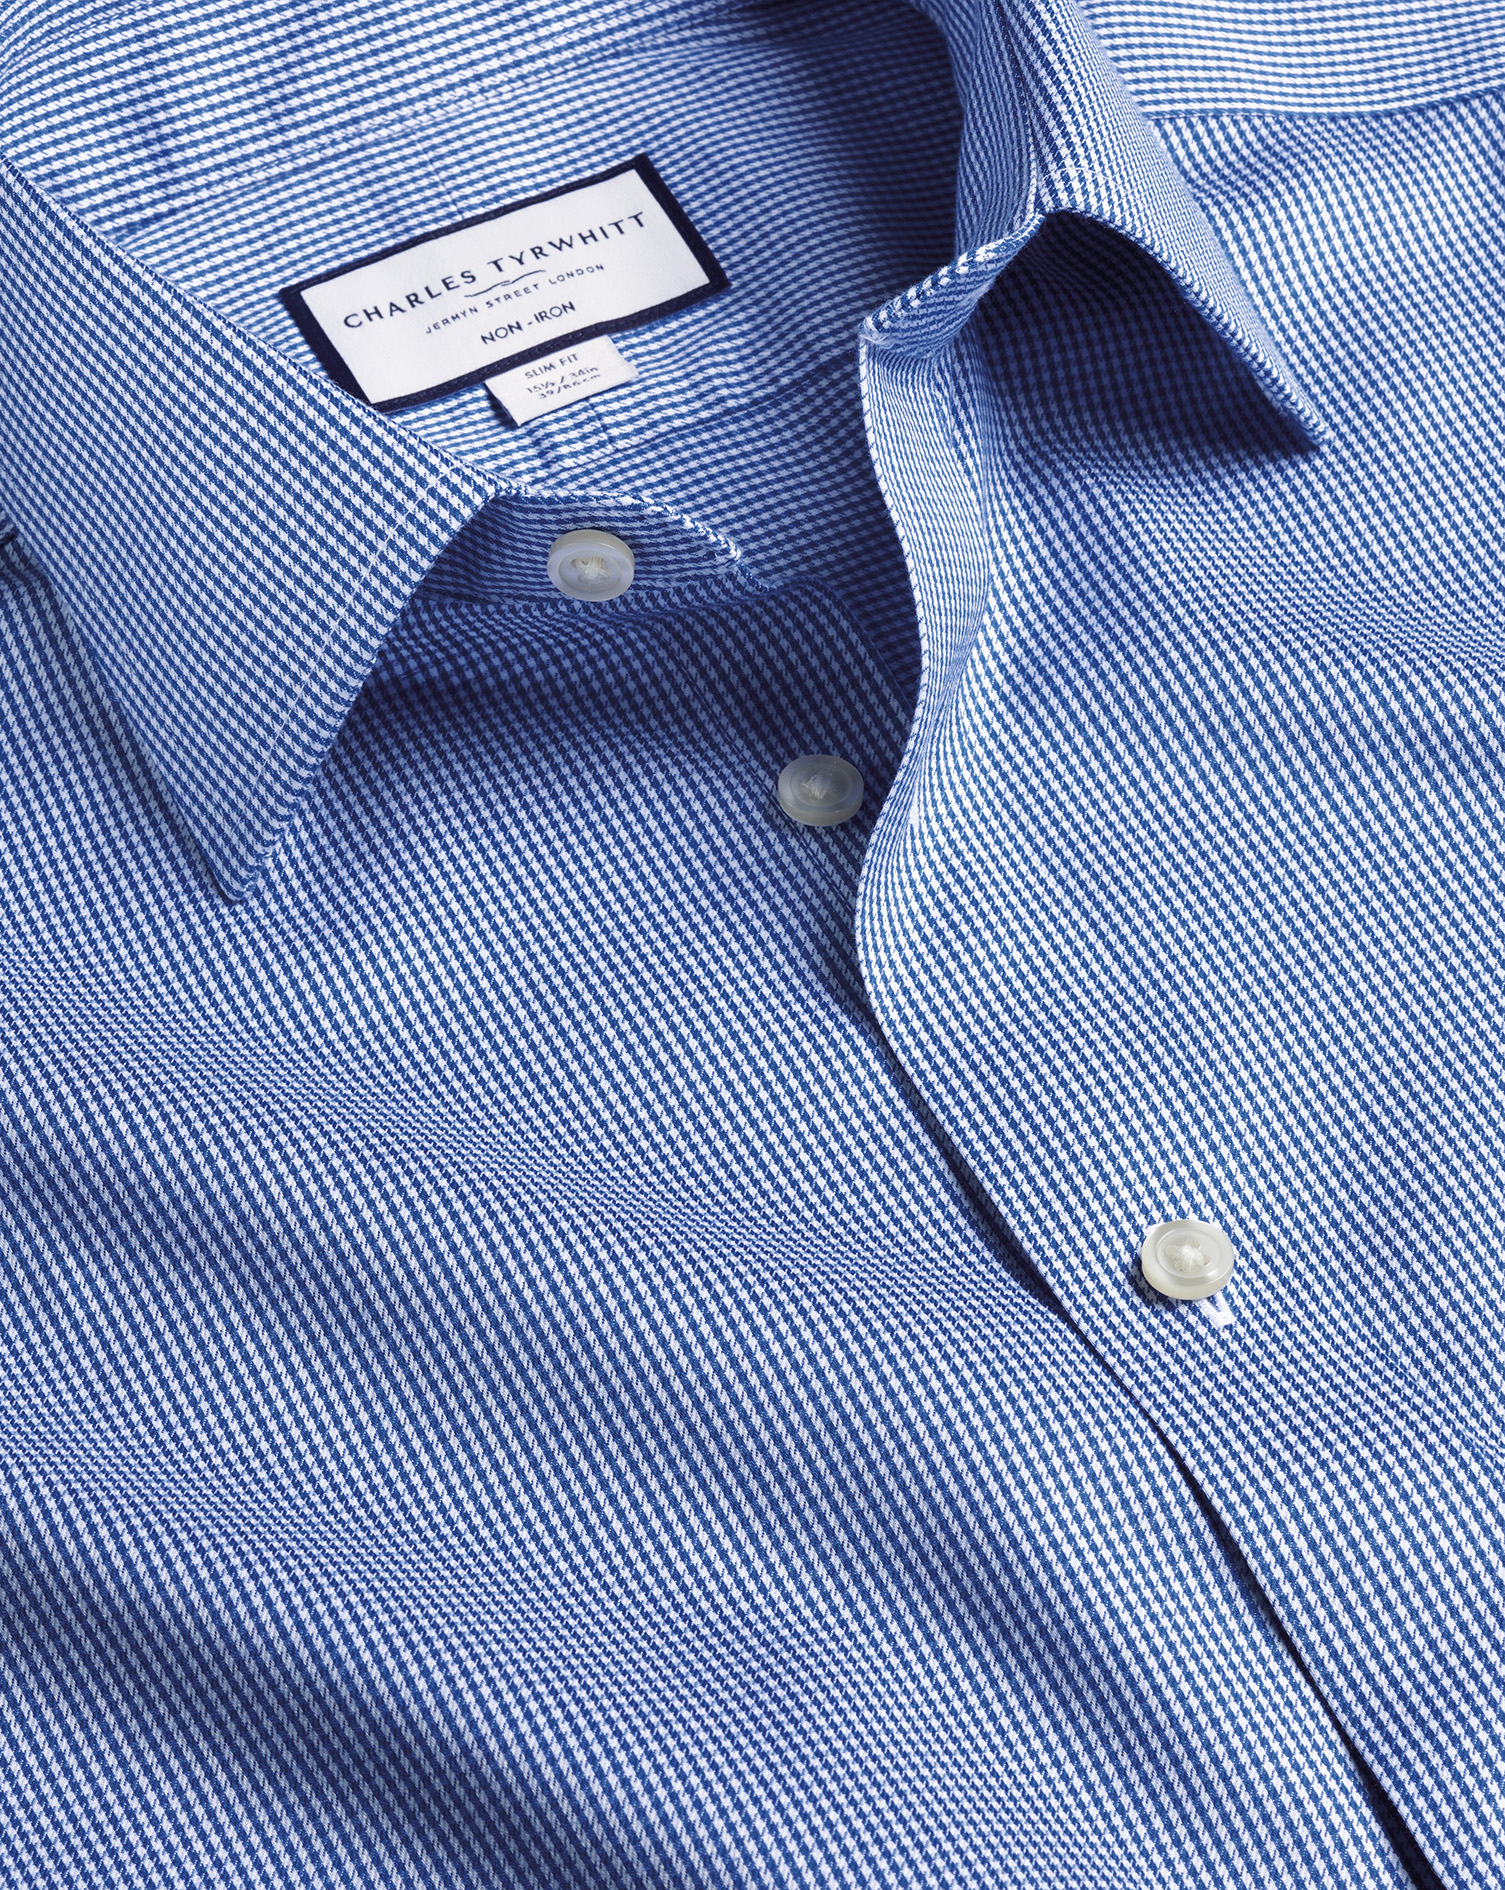 Men's Charles Tyrwhitt Non-Iron Puppytooth Dress Shirt - Royal Blue Single Cuff Size Small Cotton
